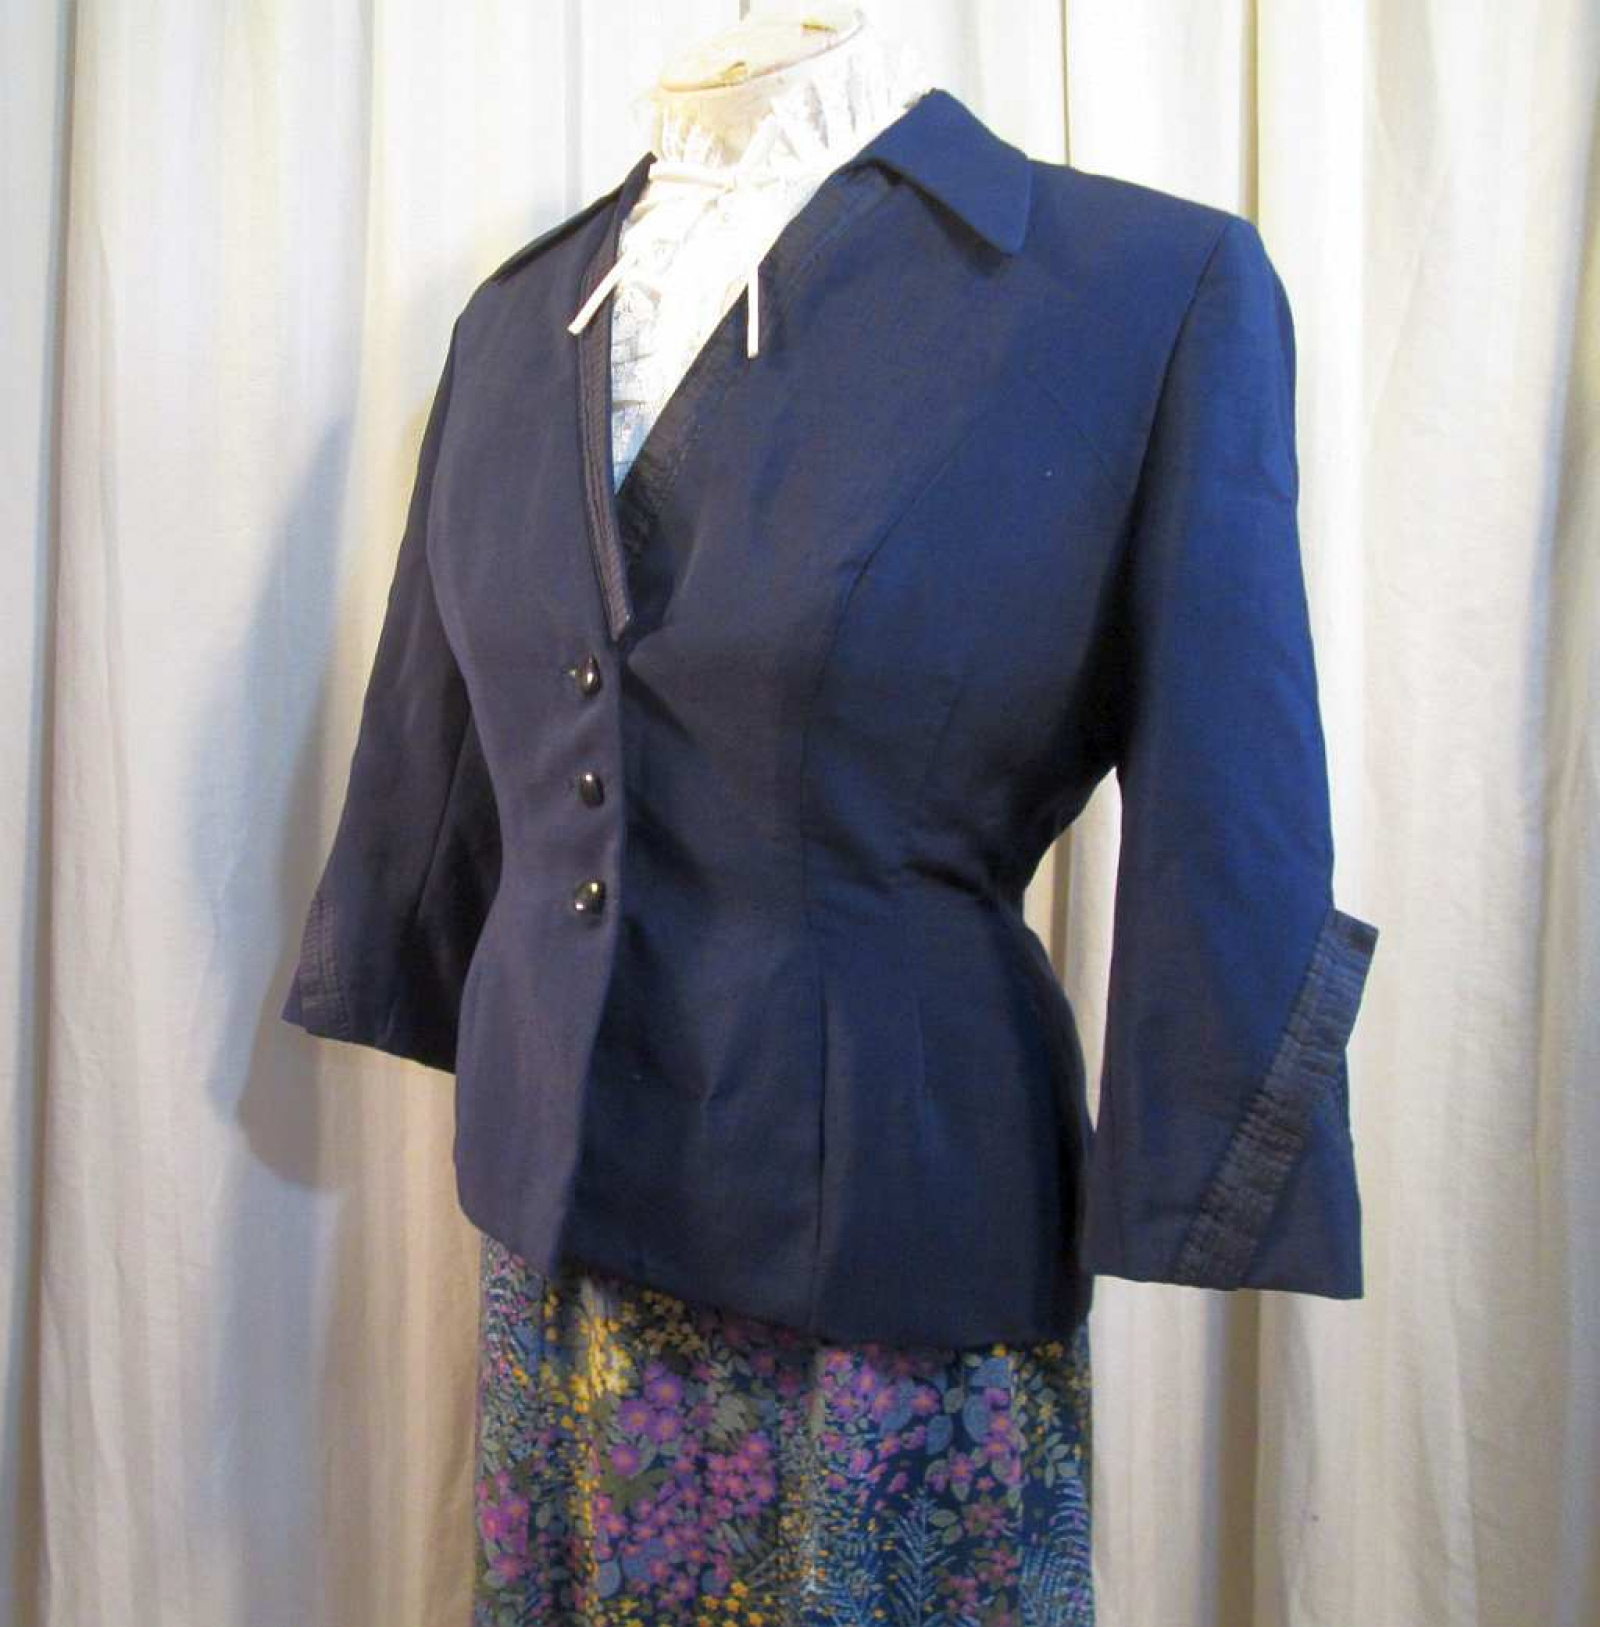 Aspire Overtake rim Vintage suit jacket classic 50s style in navy blue wool silk trim |  funkomavintage